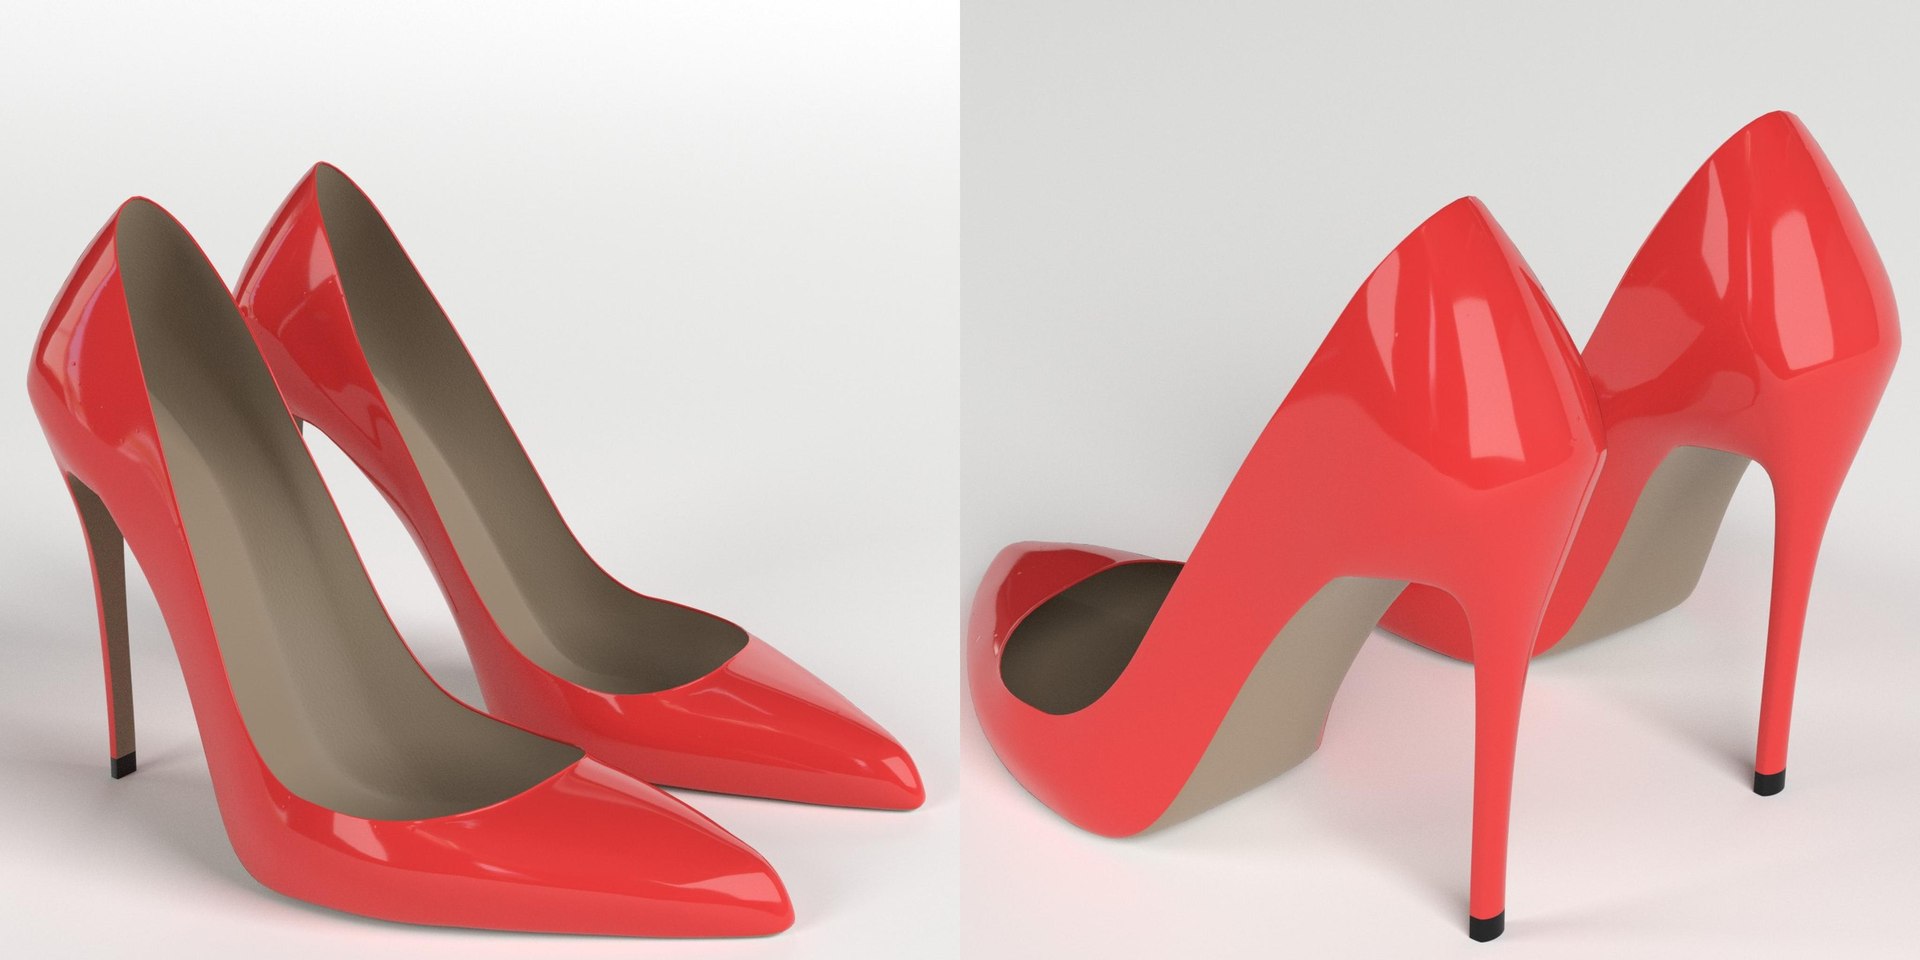 3D Red Shoes 1 Model - TurboSquid 1349729